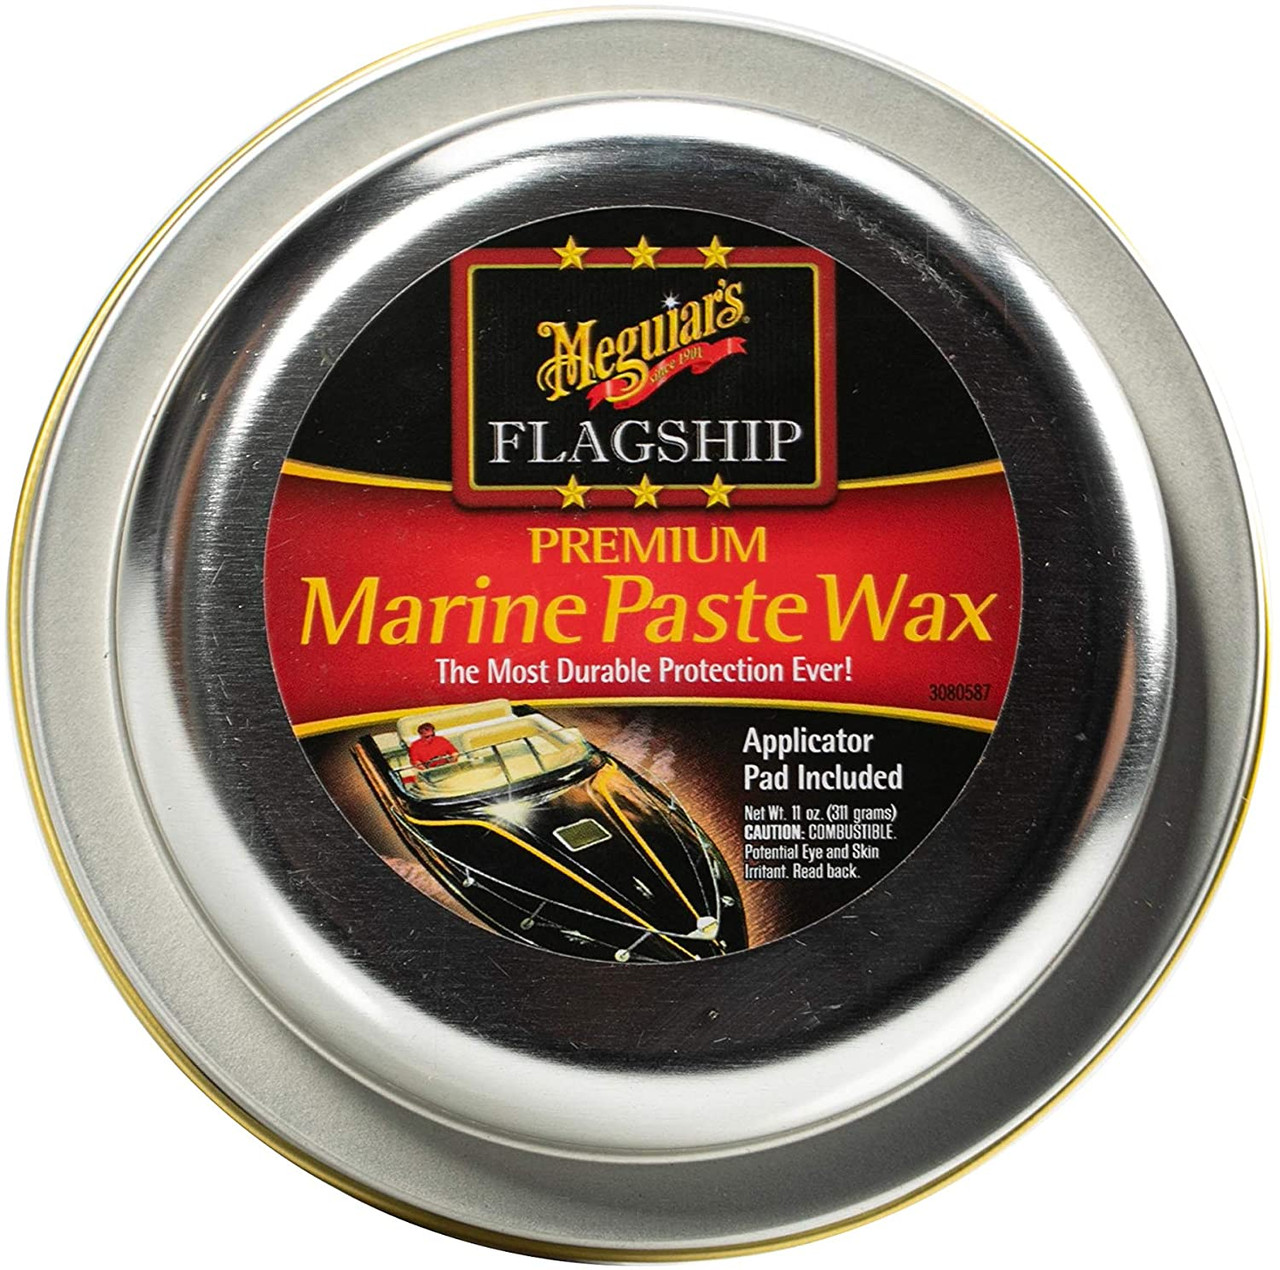 Premium Cleaner Wax